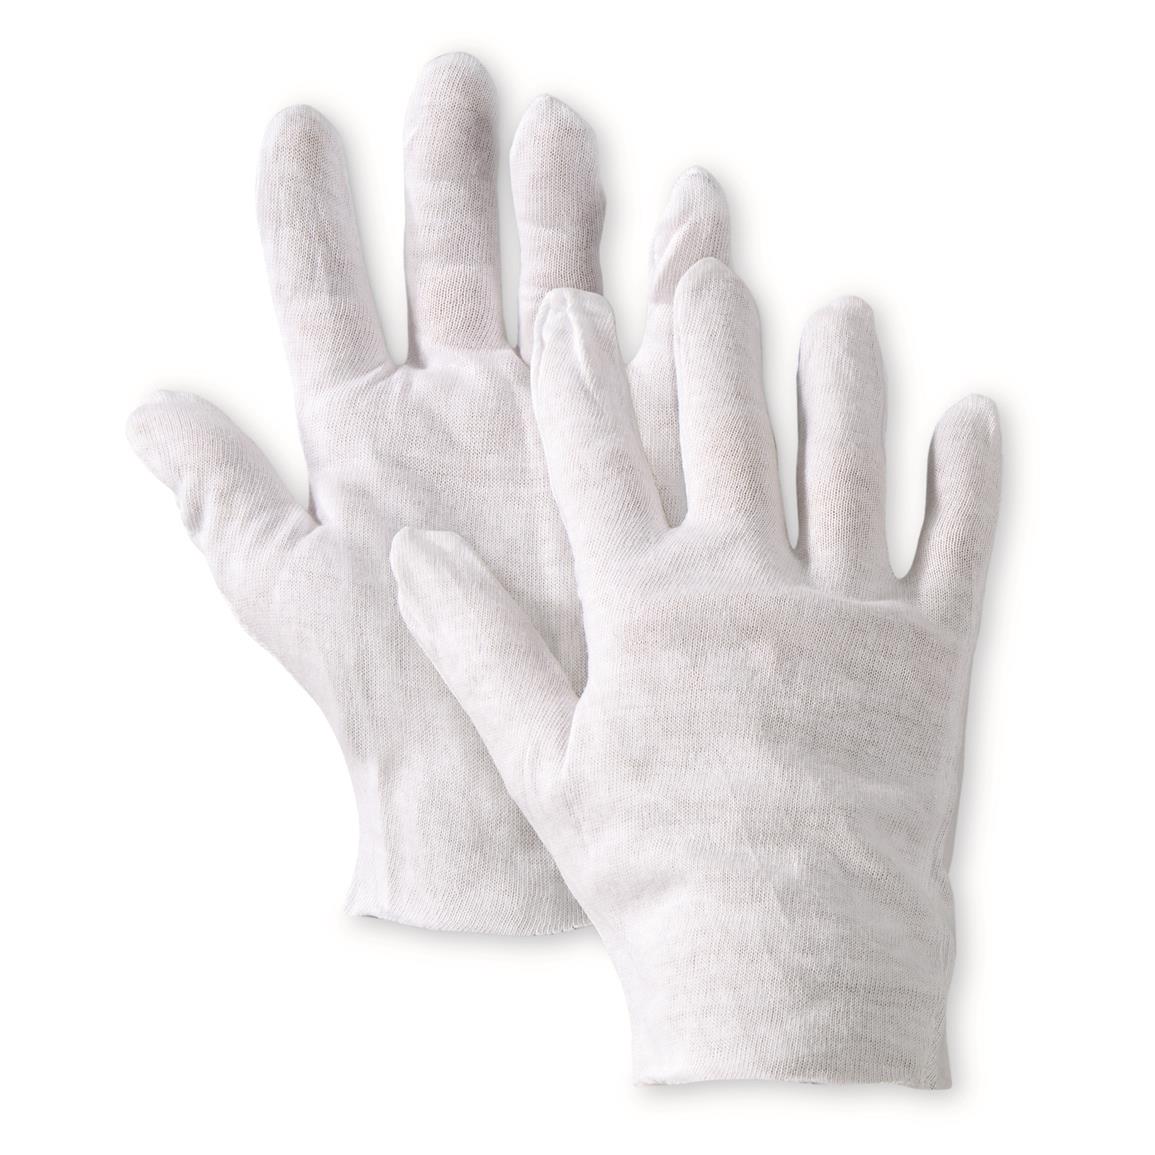 U.S. Municipal Surplus White Cotton Gloves, 24 pairs, New, White